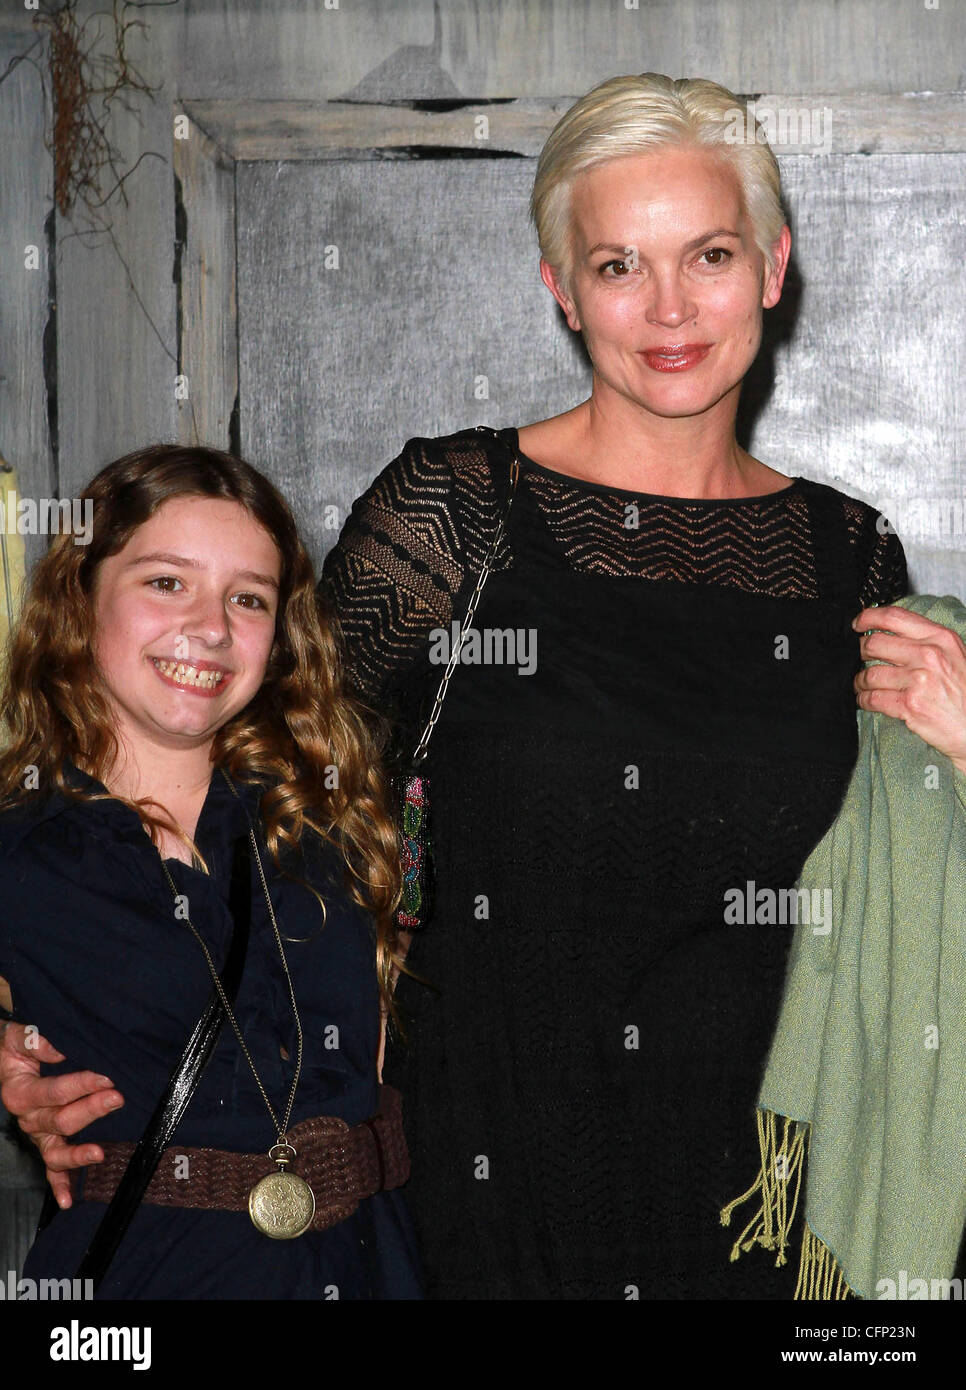 Elizabeth Gracen with her Daughter Los Angeles premiere of 'Rango' held at The Regency Village Theatre Westwood, California - 14.02.11 Stock Photo